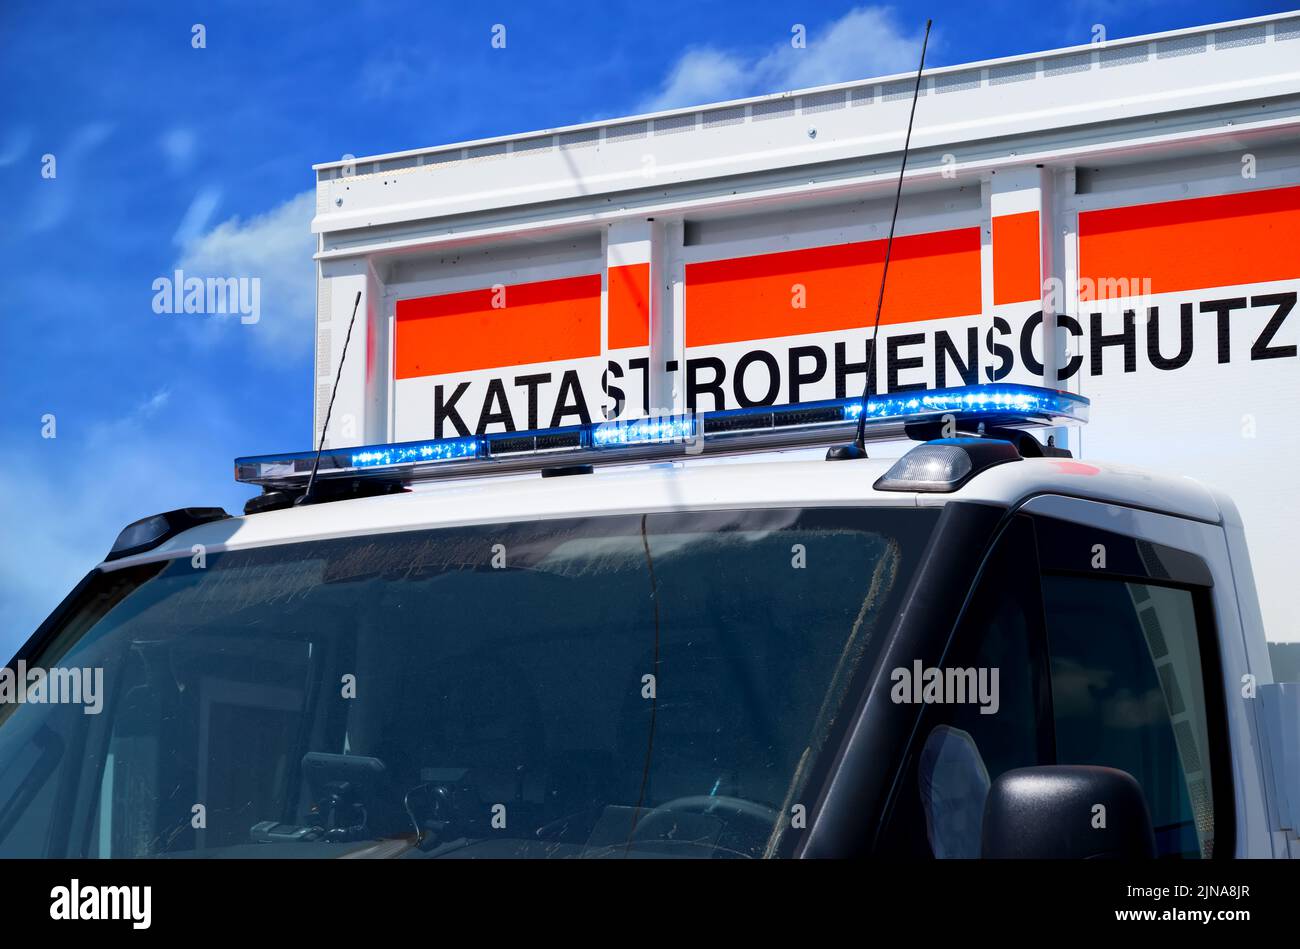 Emergency vehicle with the lettering disaster protection – Katastrophenschutz Einsatzfahrzeug Stock Photo